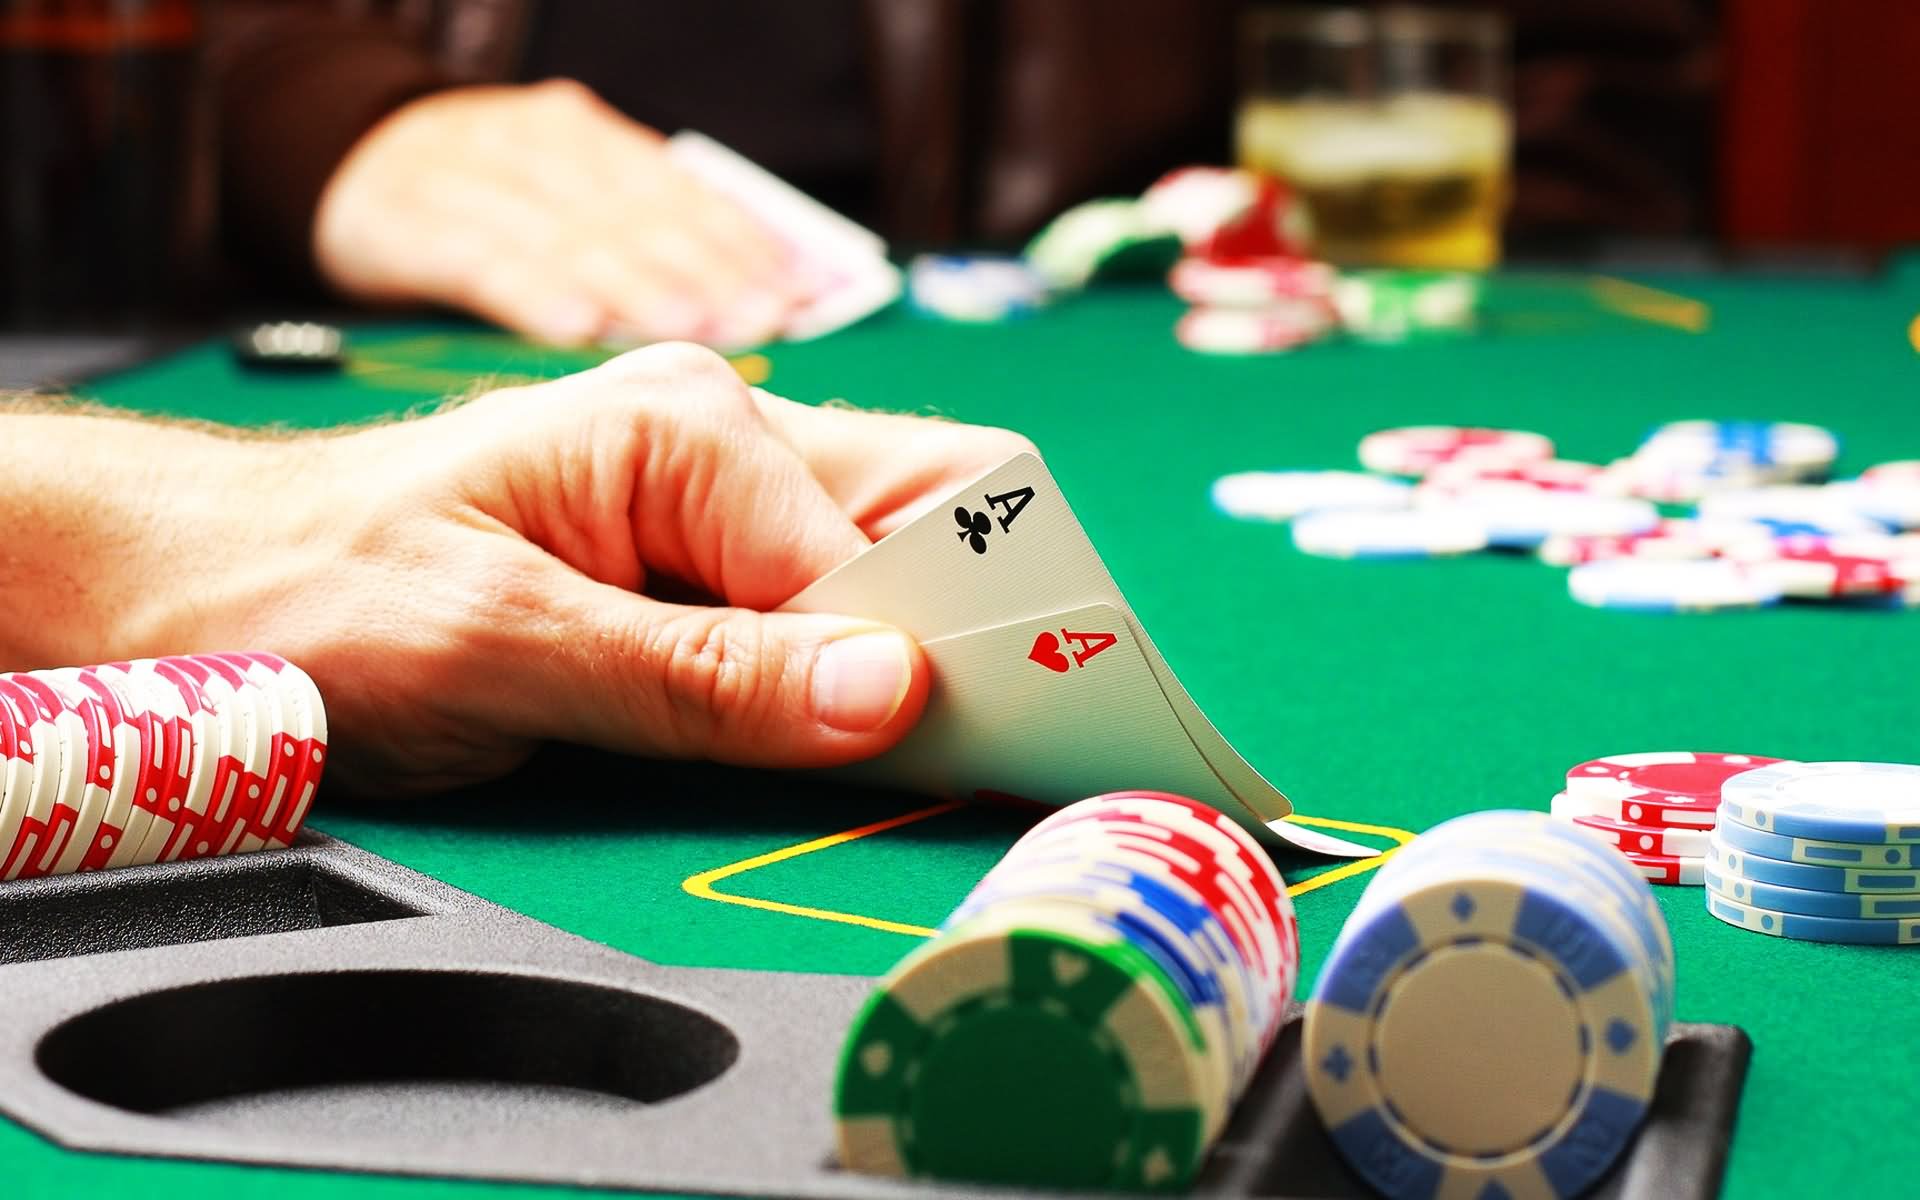 Is online gambling source for easy money?